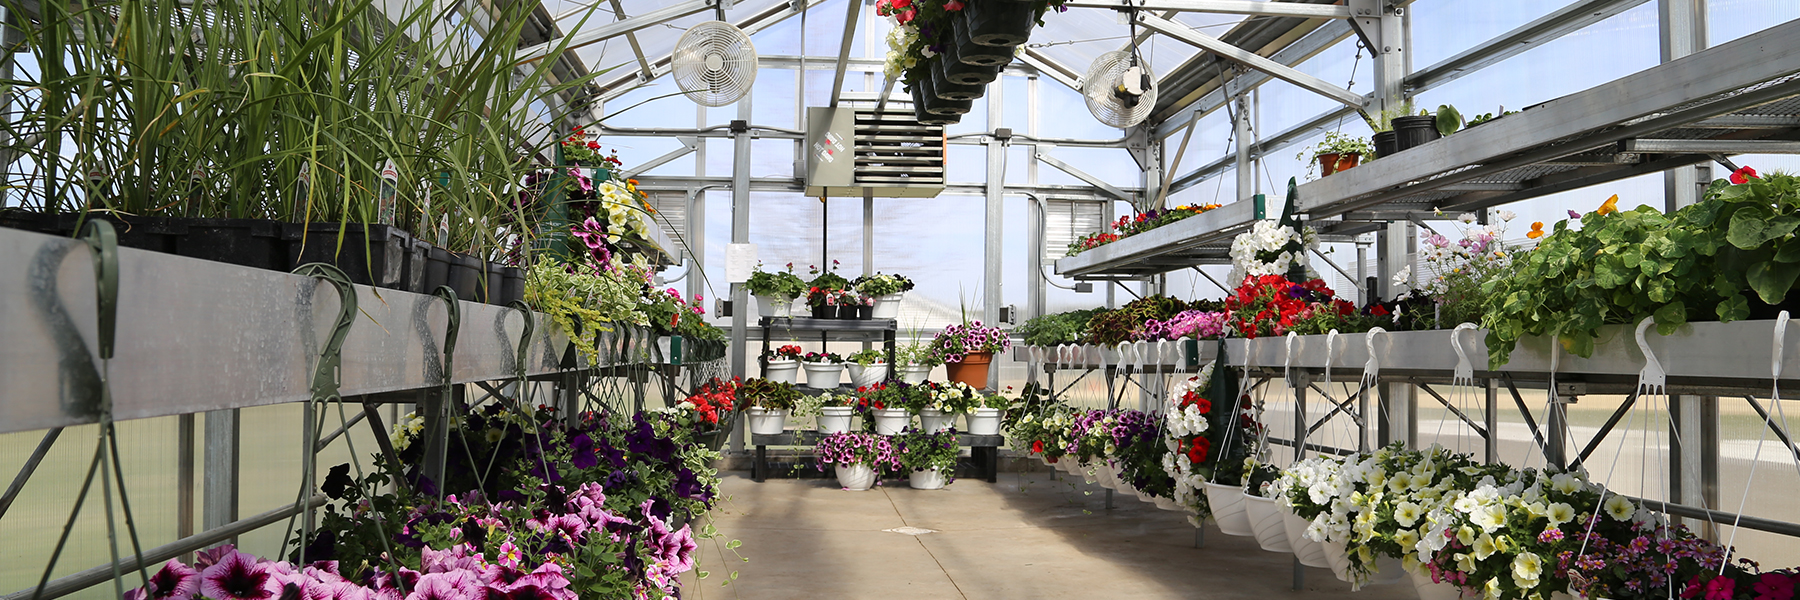 Starmont flower greenhouse